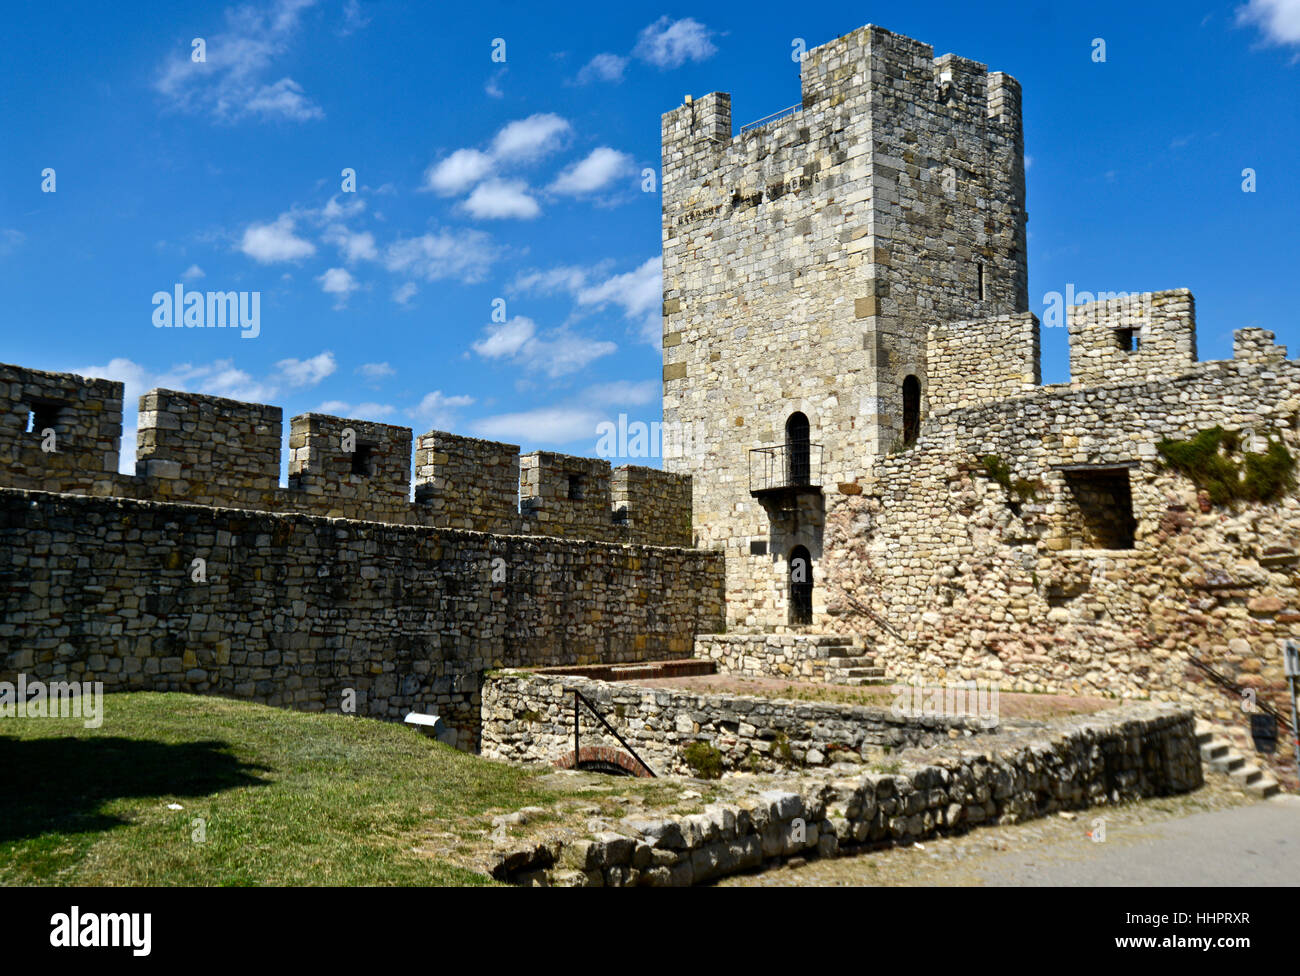 Belgrade Fortress, Kalemegdan, Serbia. Tower and defensive walls Stock Photo